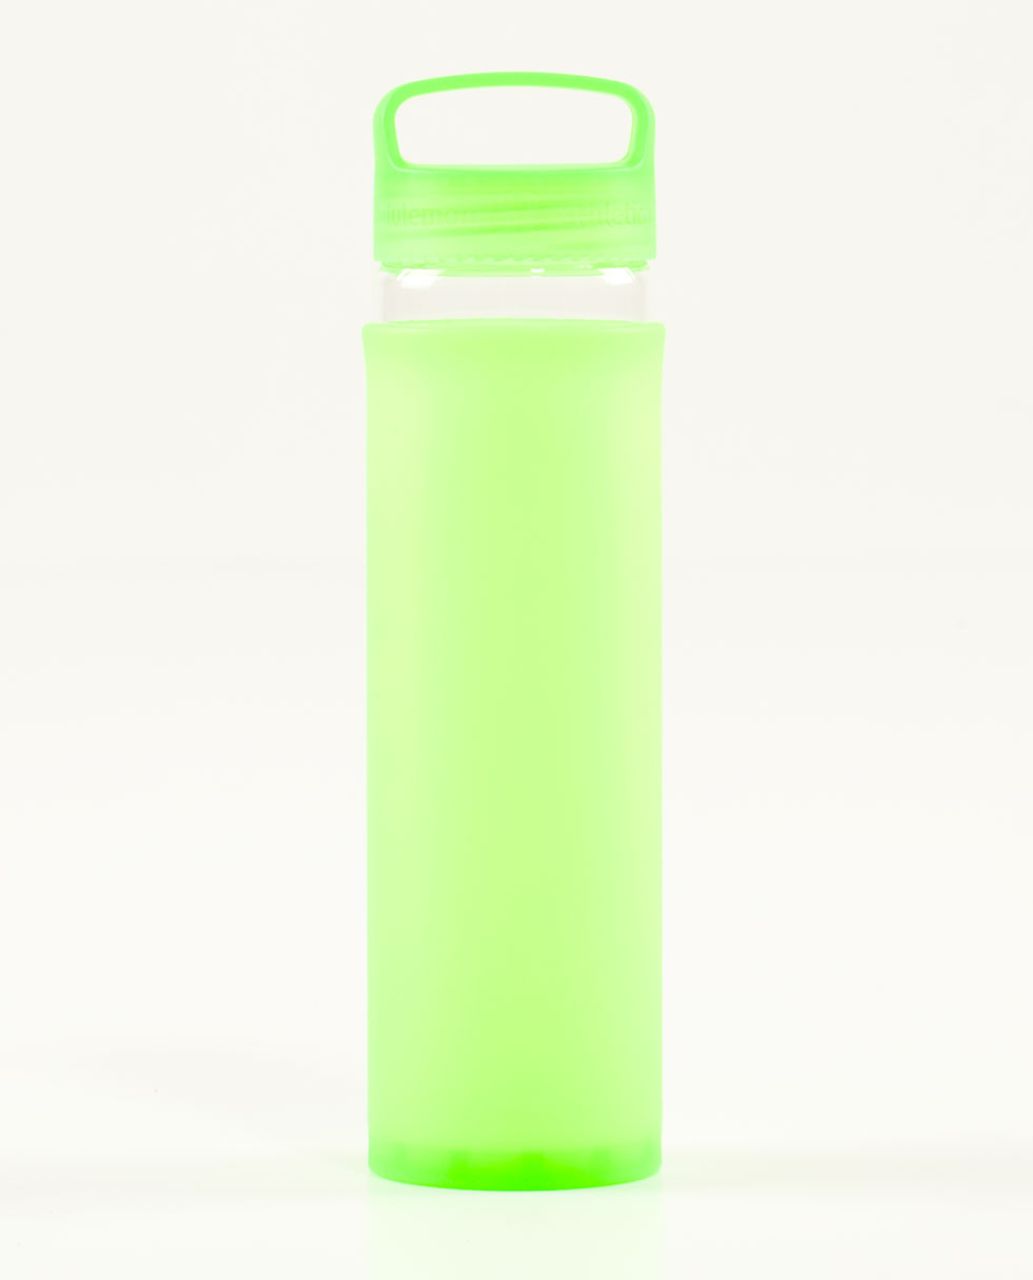 Lululemon Pure Balance Water Bottle - Zippy Green